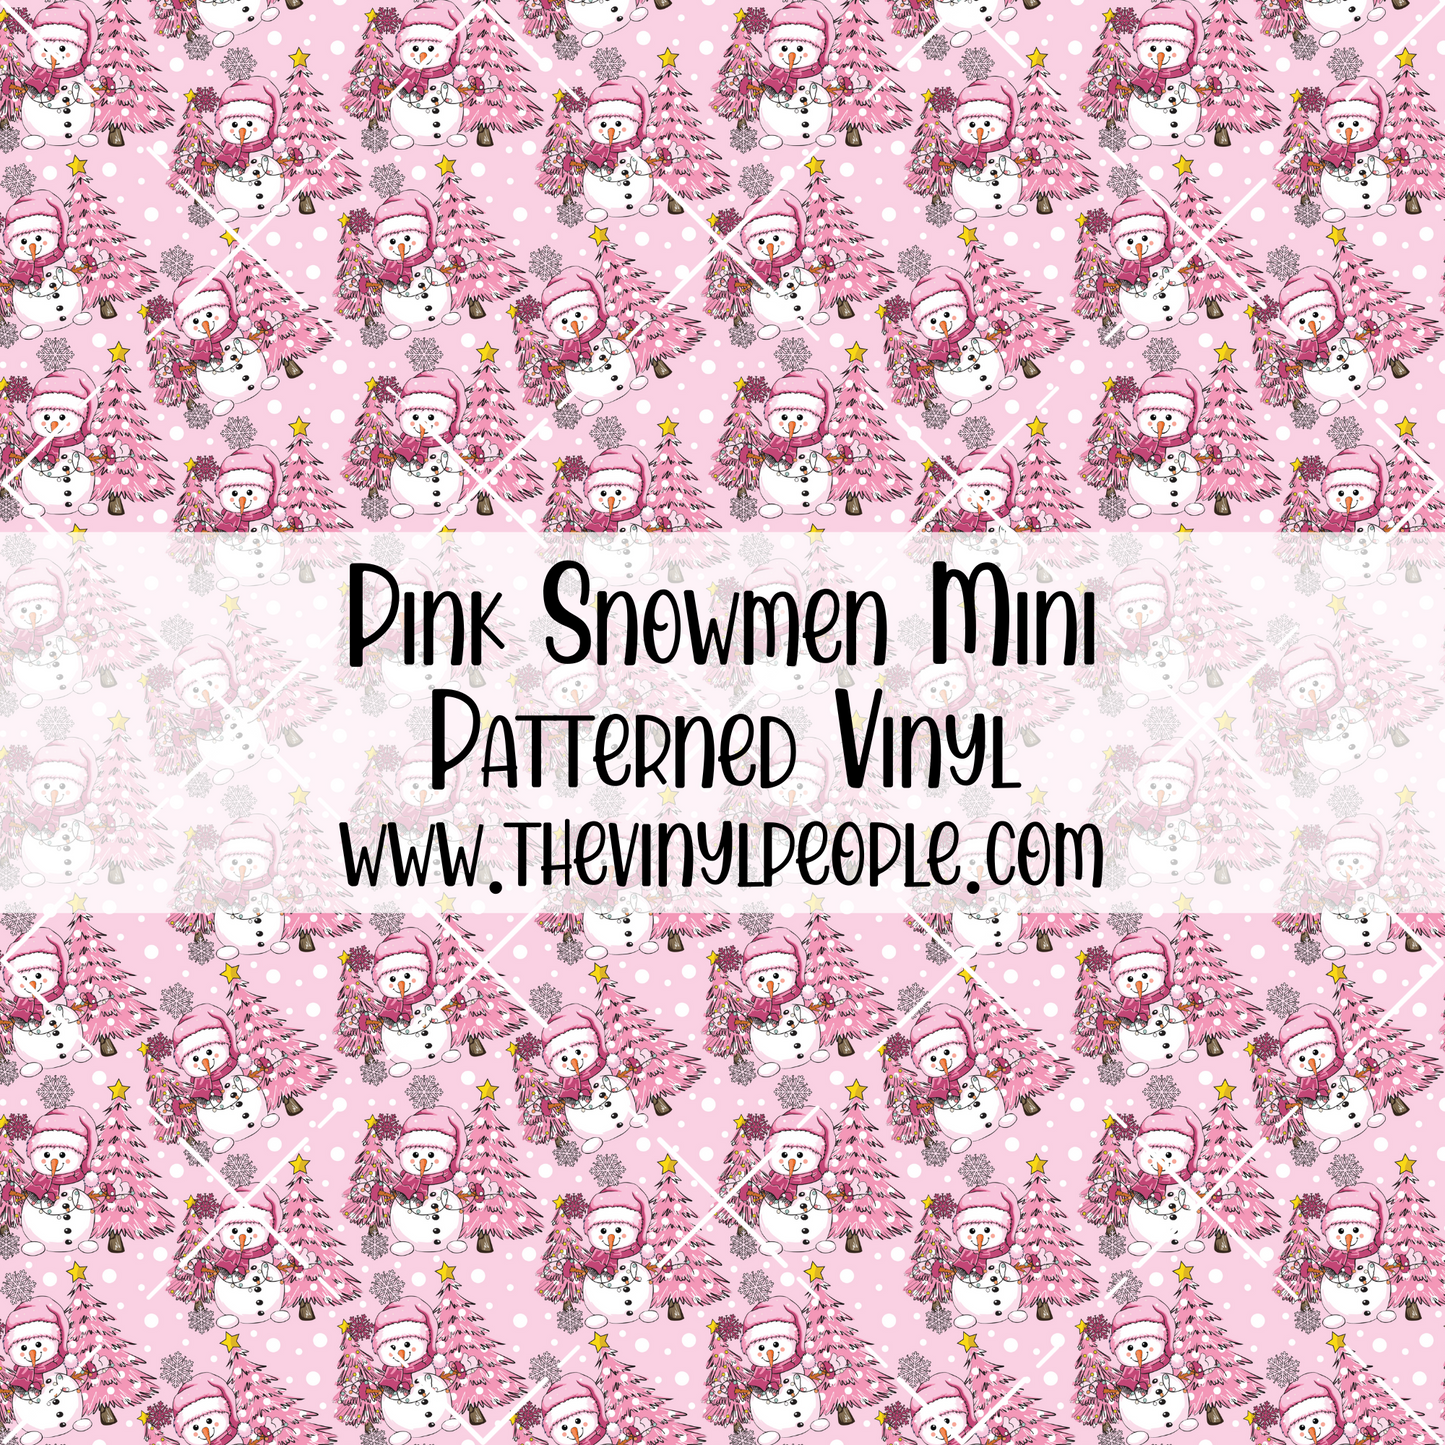 Pink Snowmen Patterned Vinyl